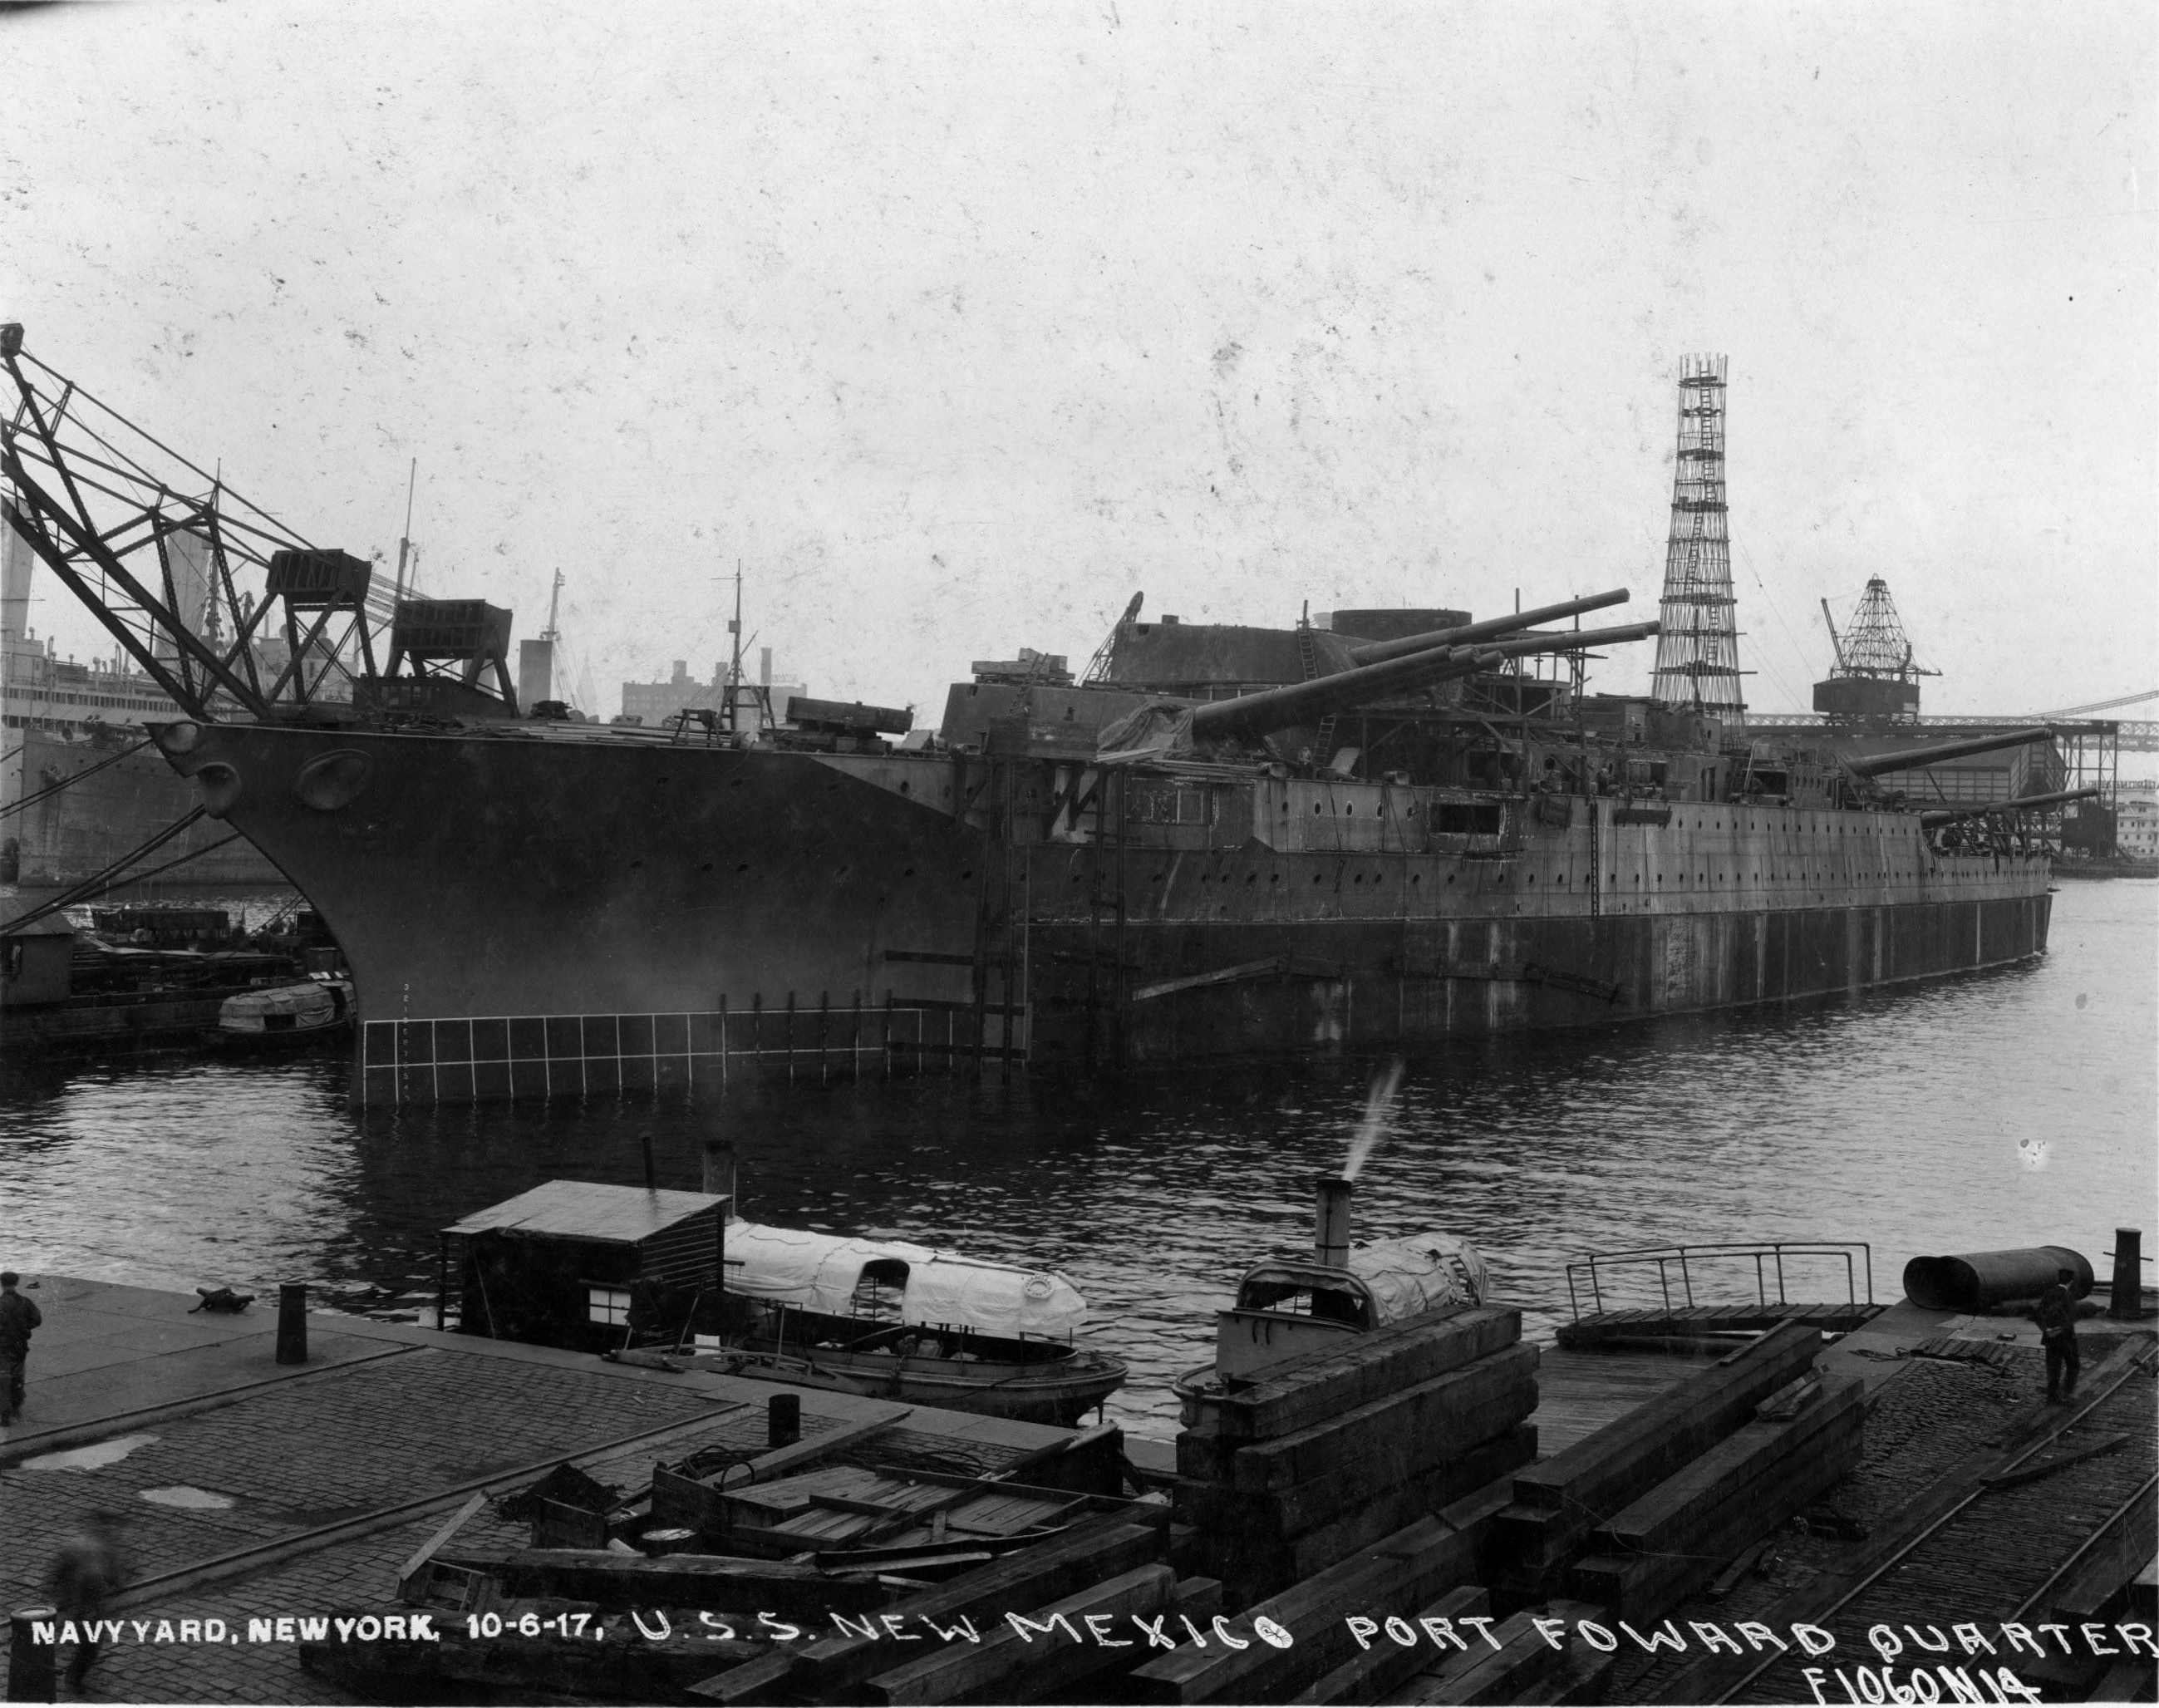 Equipping battleship New Mexico, New York Navy Yard, Brooklyn, New York, United States, 6 Oct 1917, photo 2 of 2